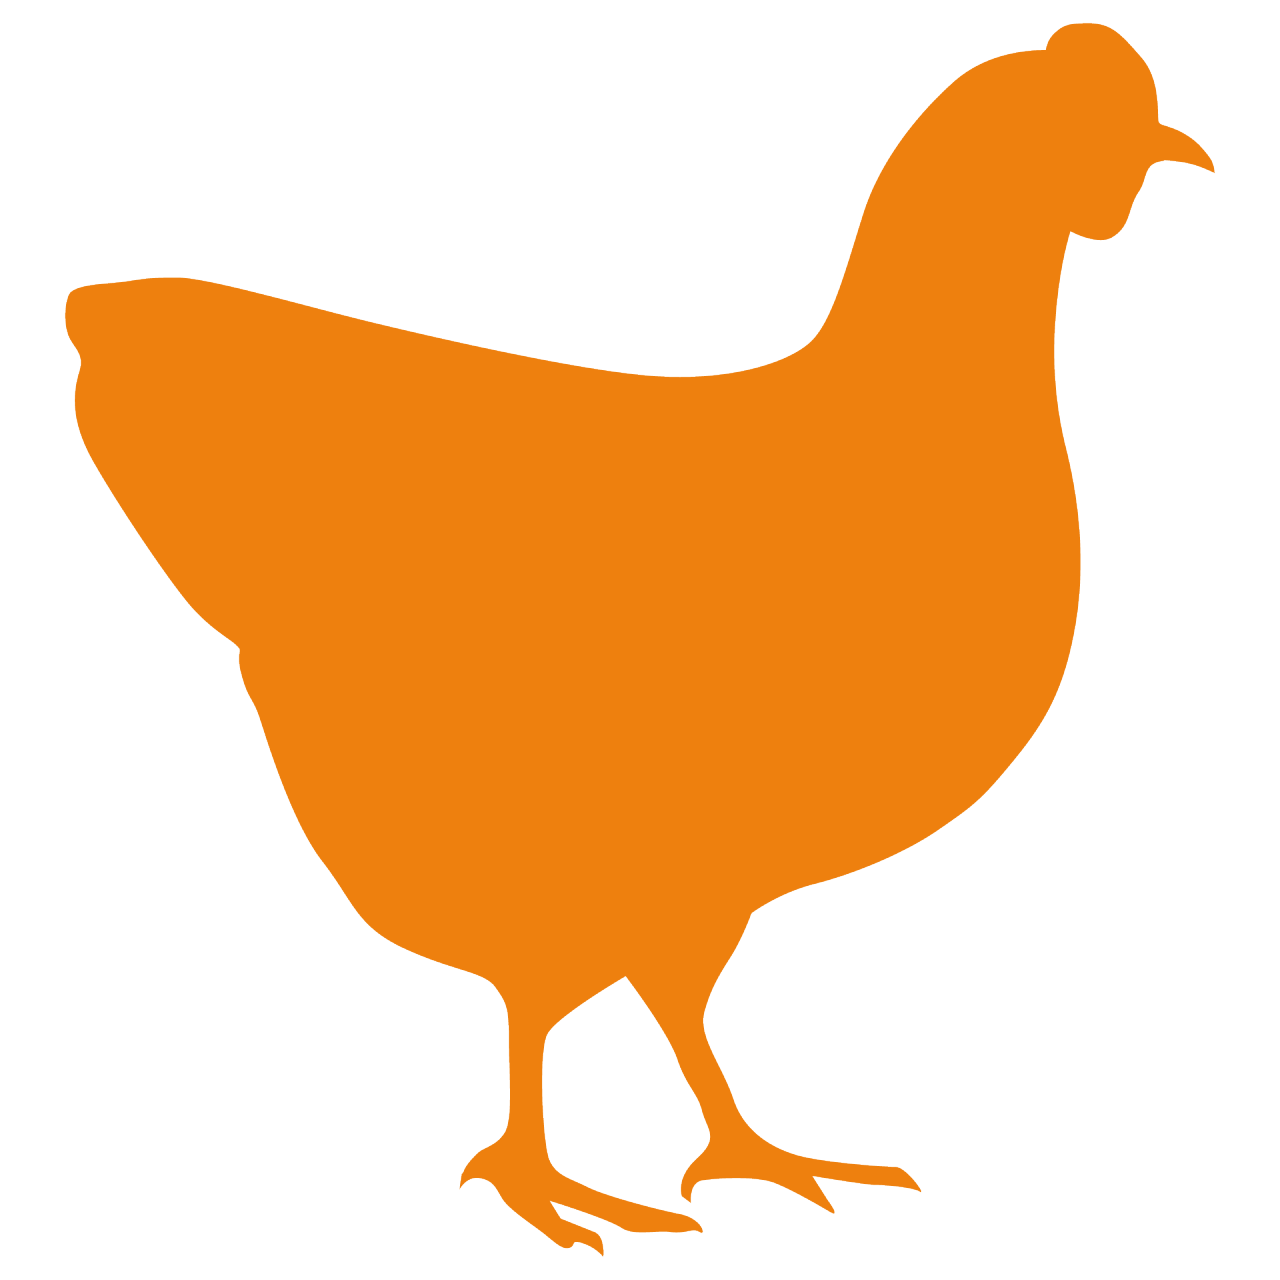 Poultry: medium risk